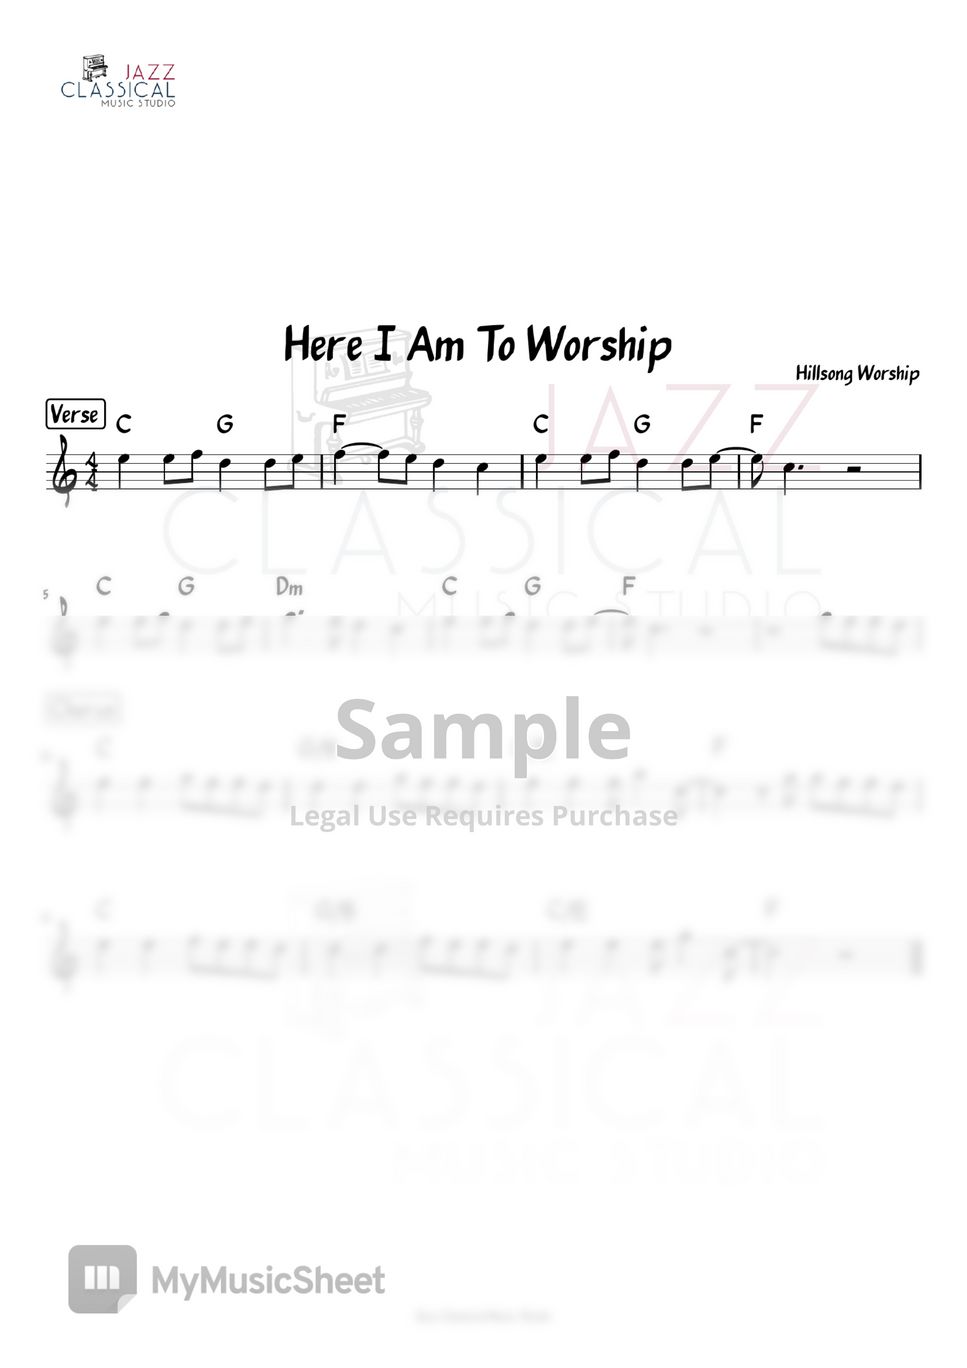 Hillsong Worship - Here I Am To Worship by Jazz Classical Music Studio